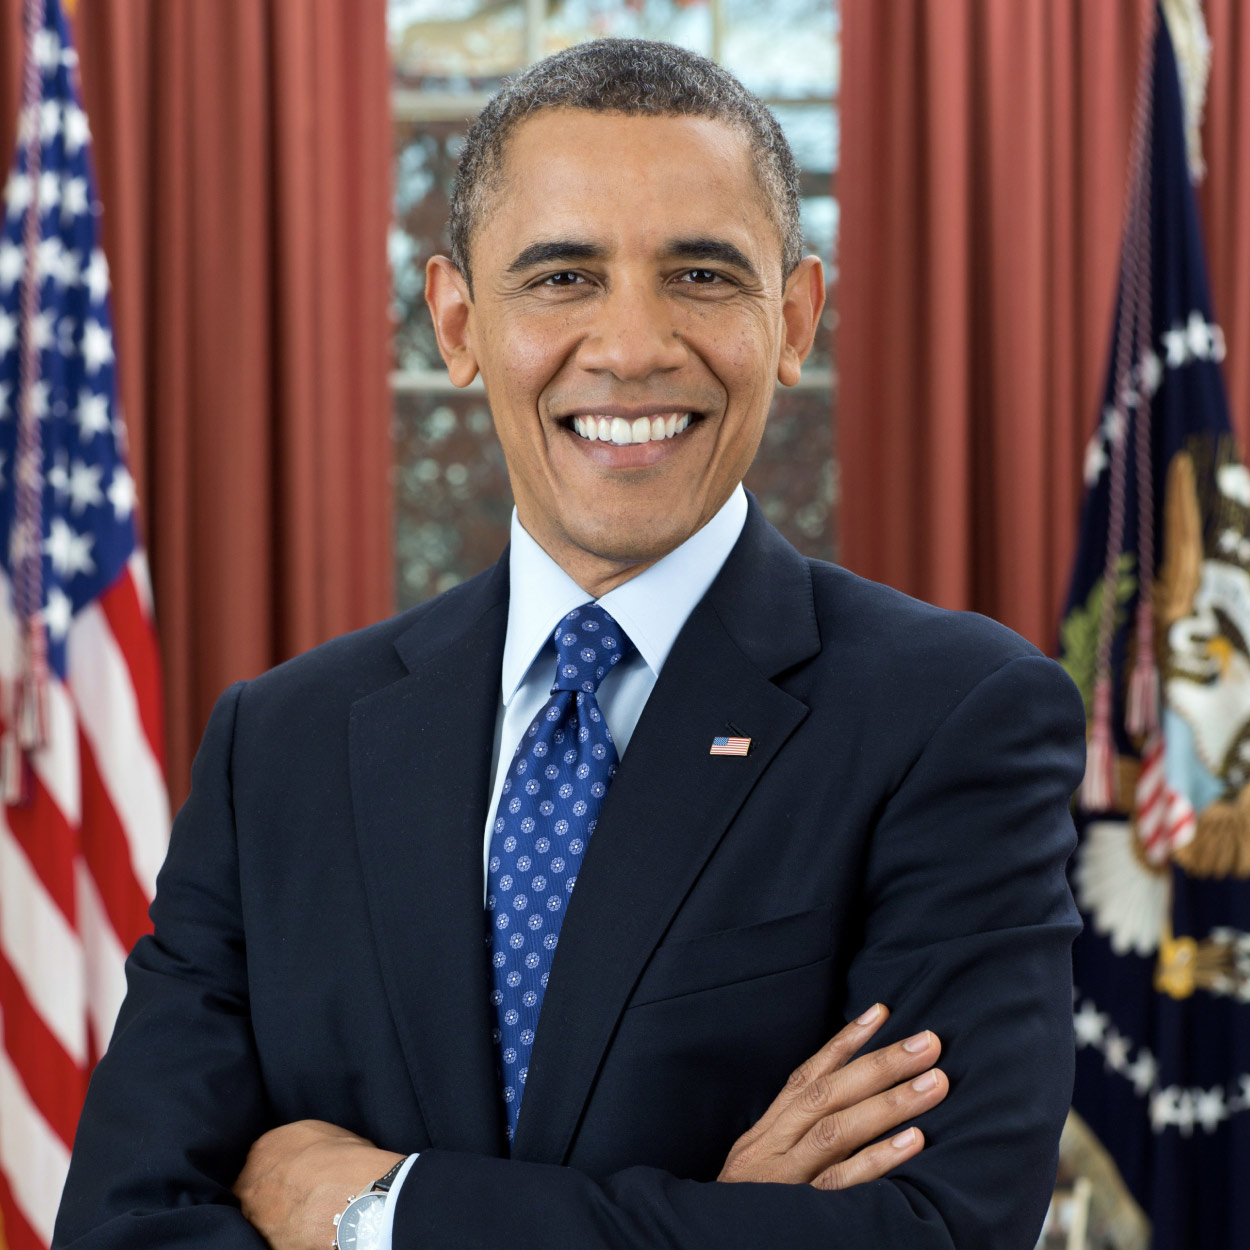 Barack Obama | The White House